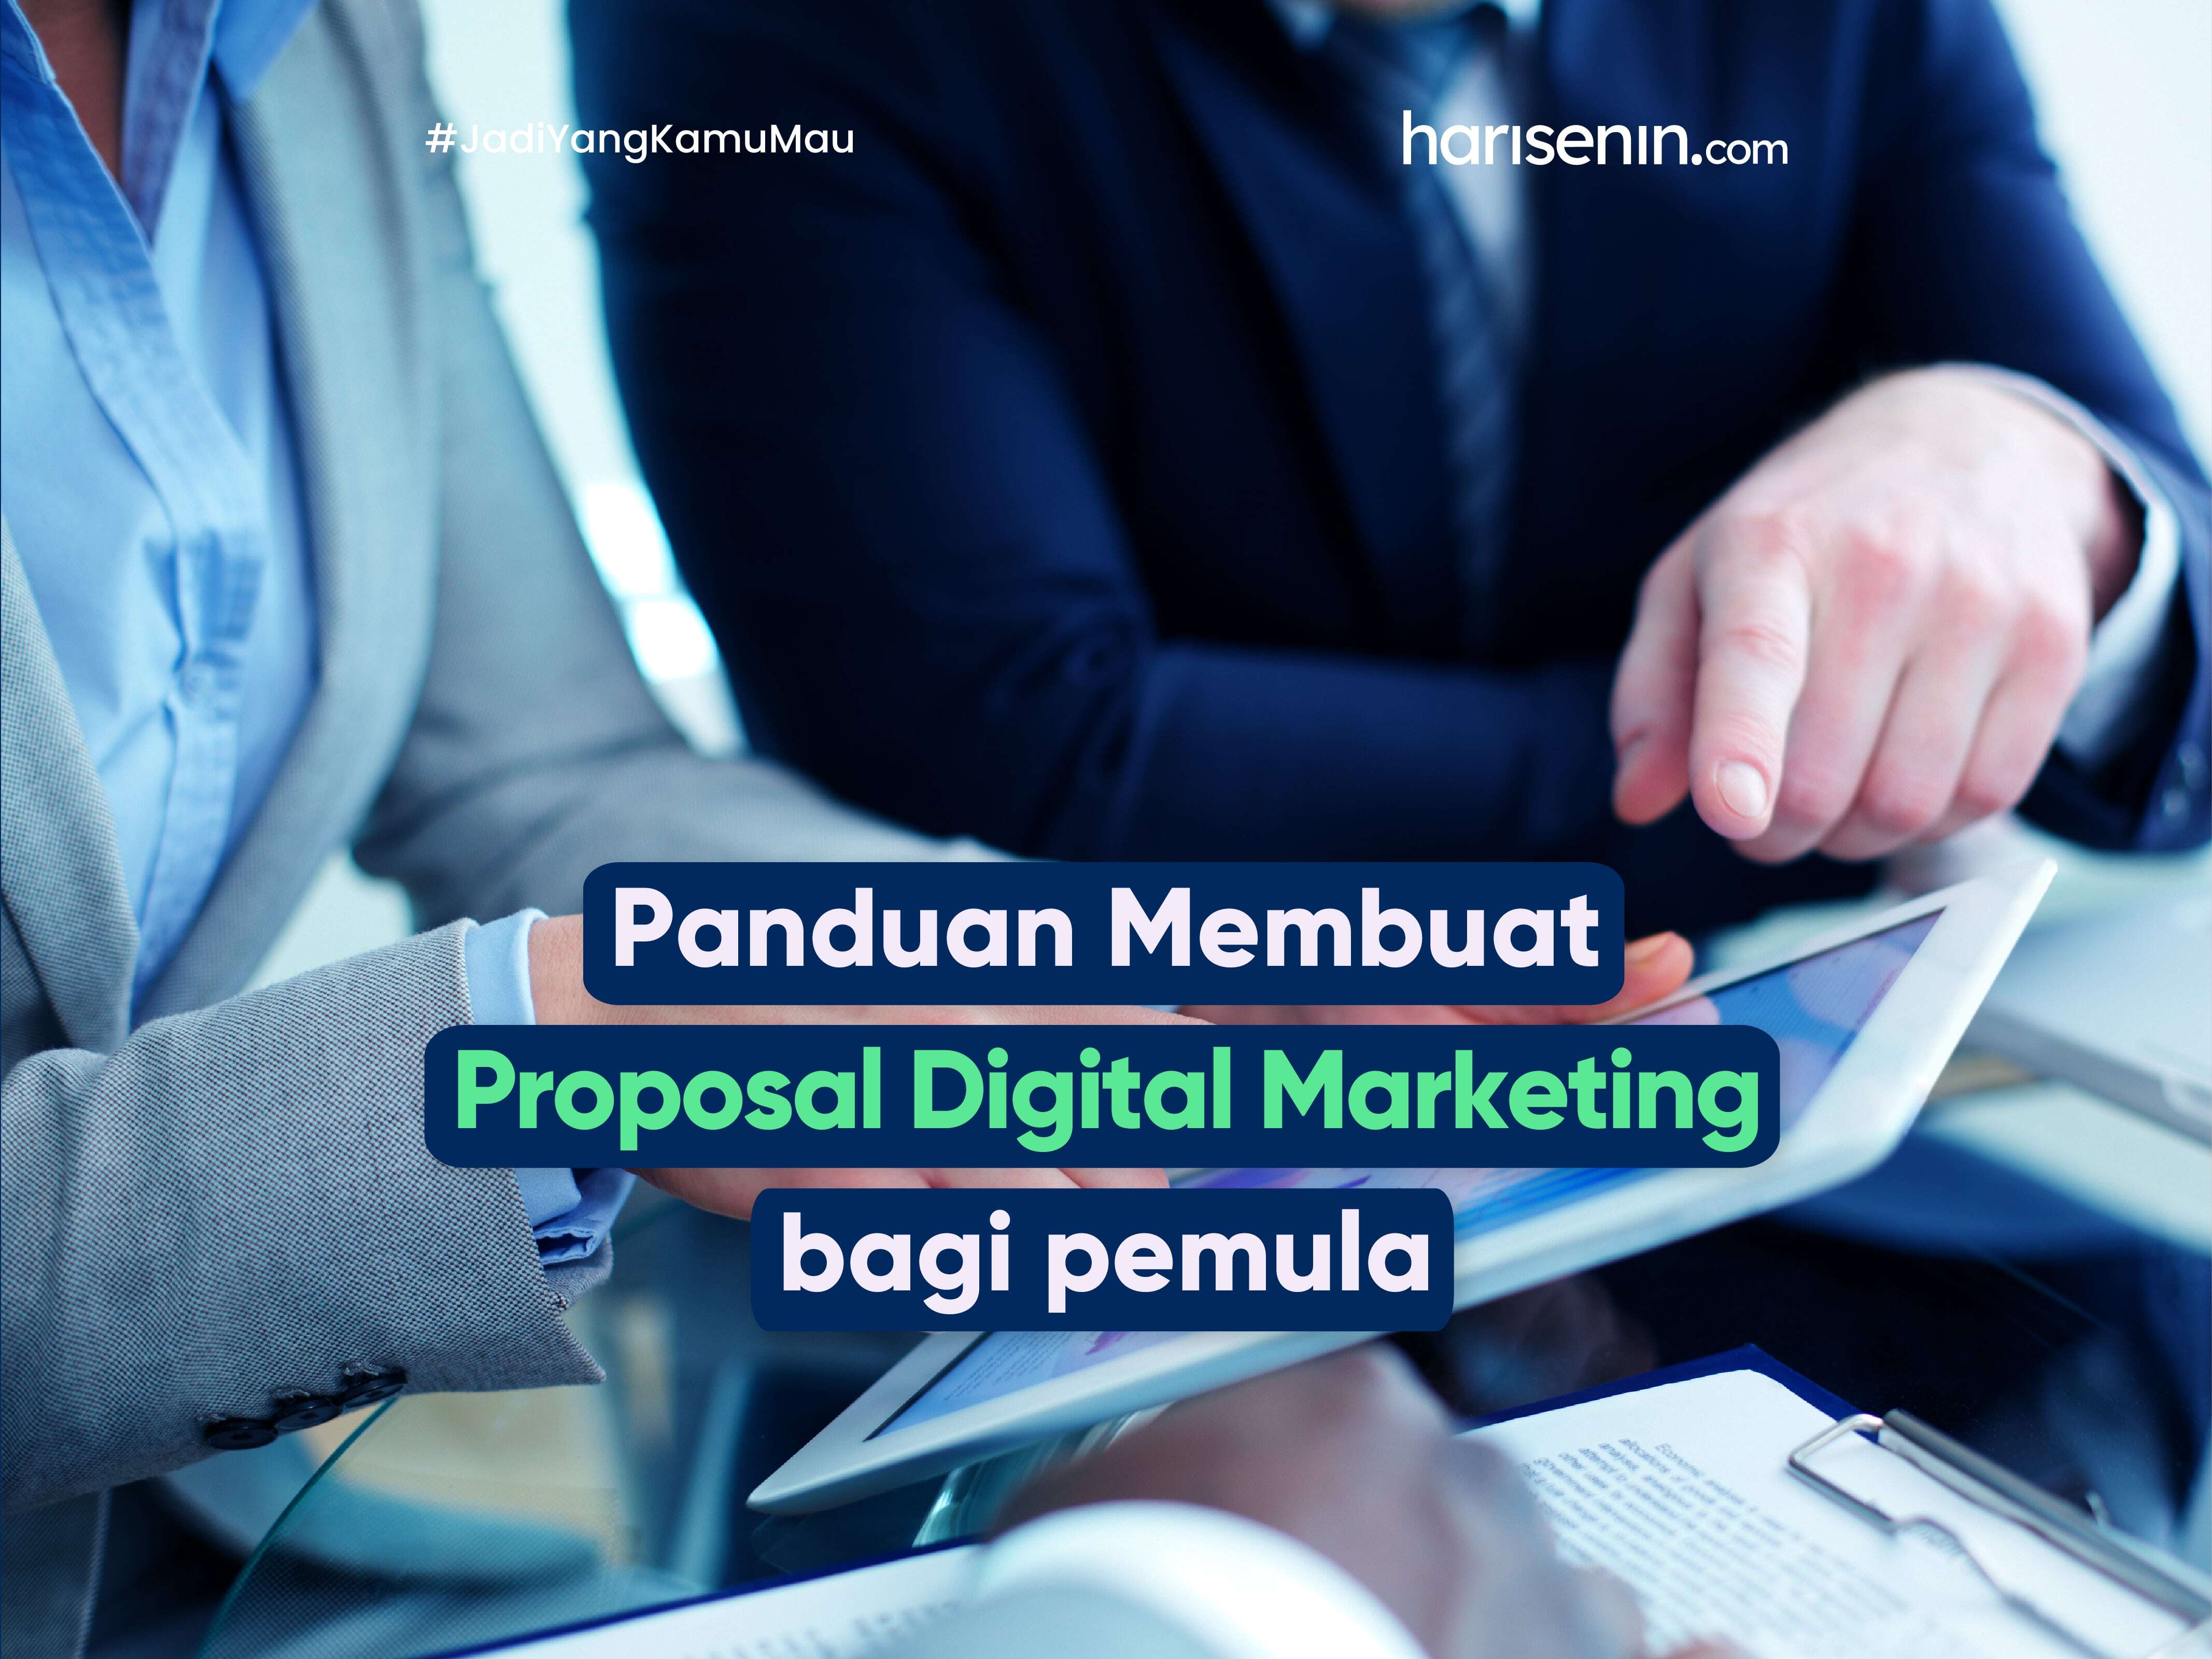 Panduan Membuat Proposal Digital Marketing bagi pemula